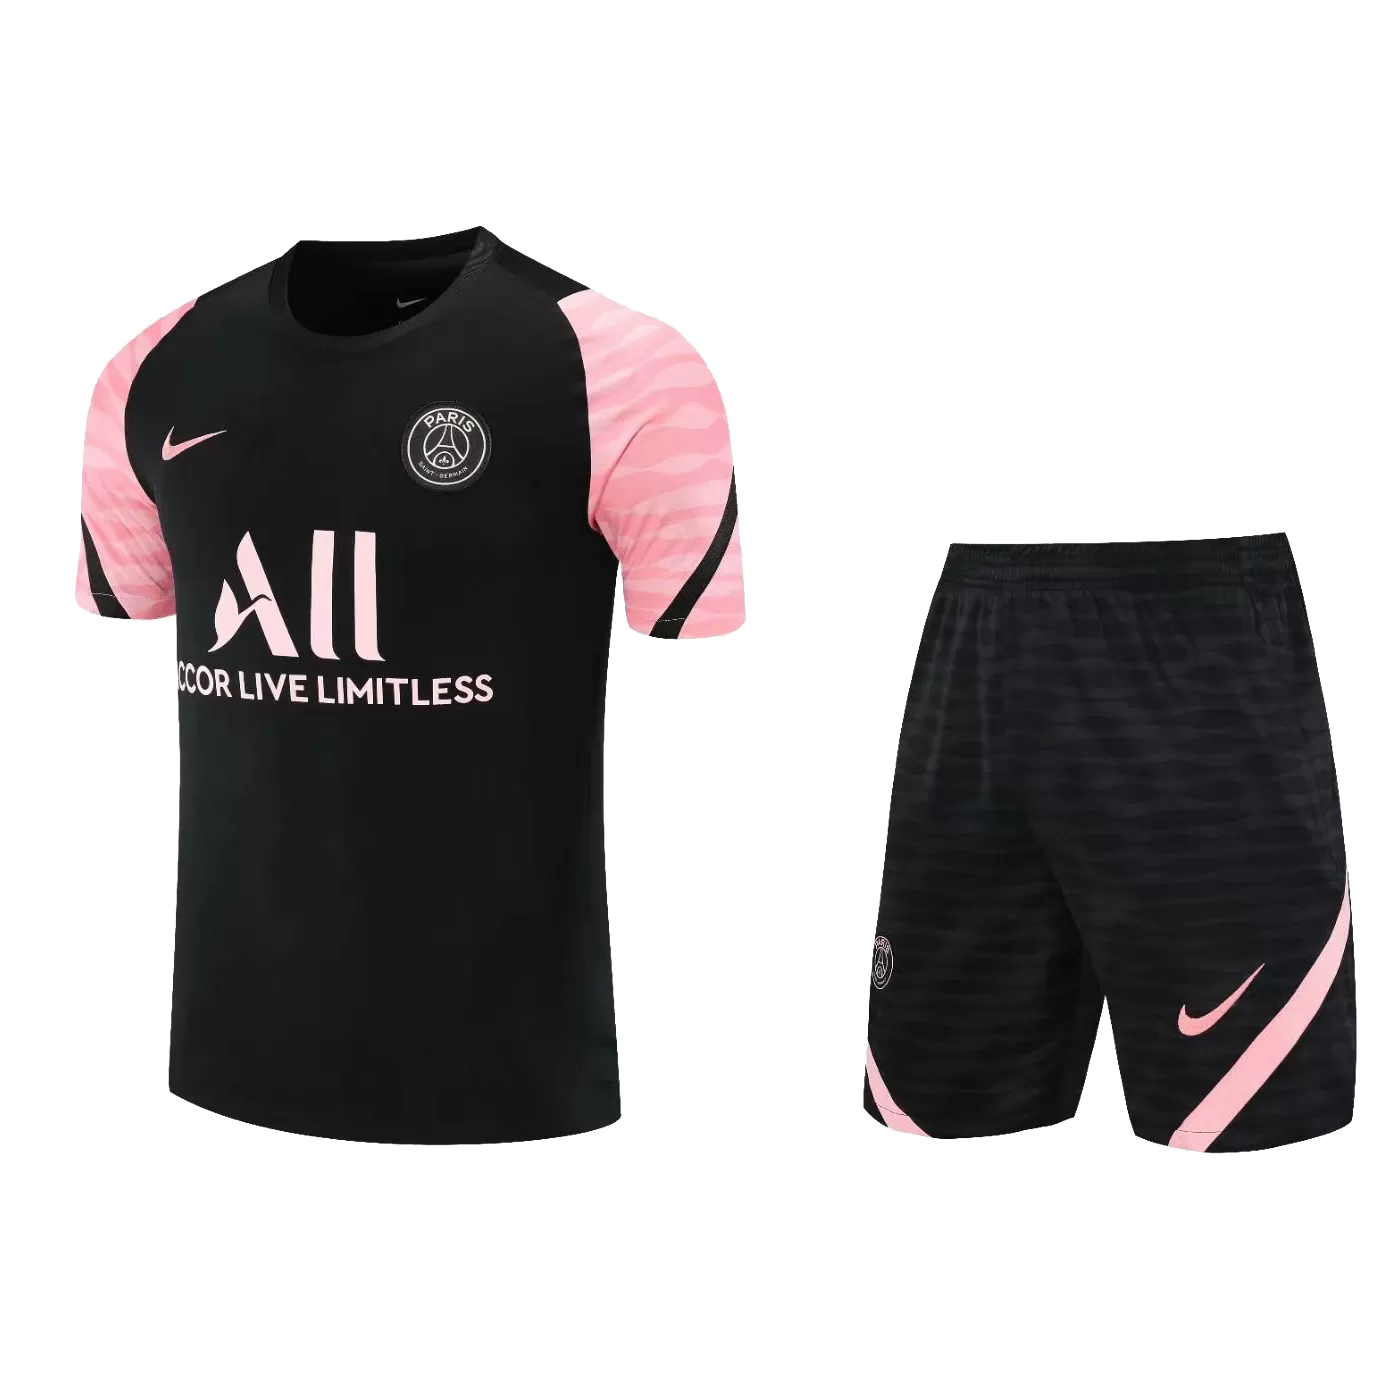 PSG Training Shirt 21/22 Black And Pink, 59% OFF